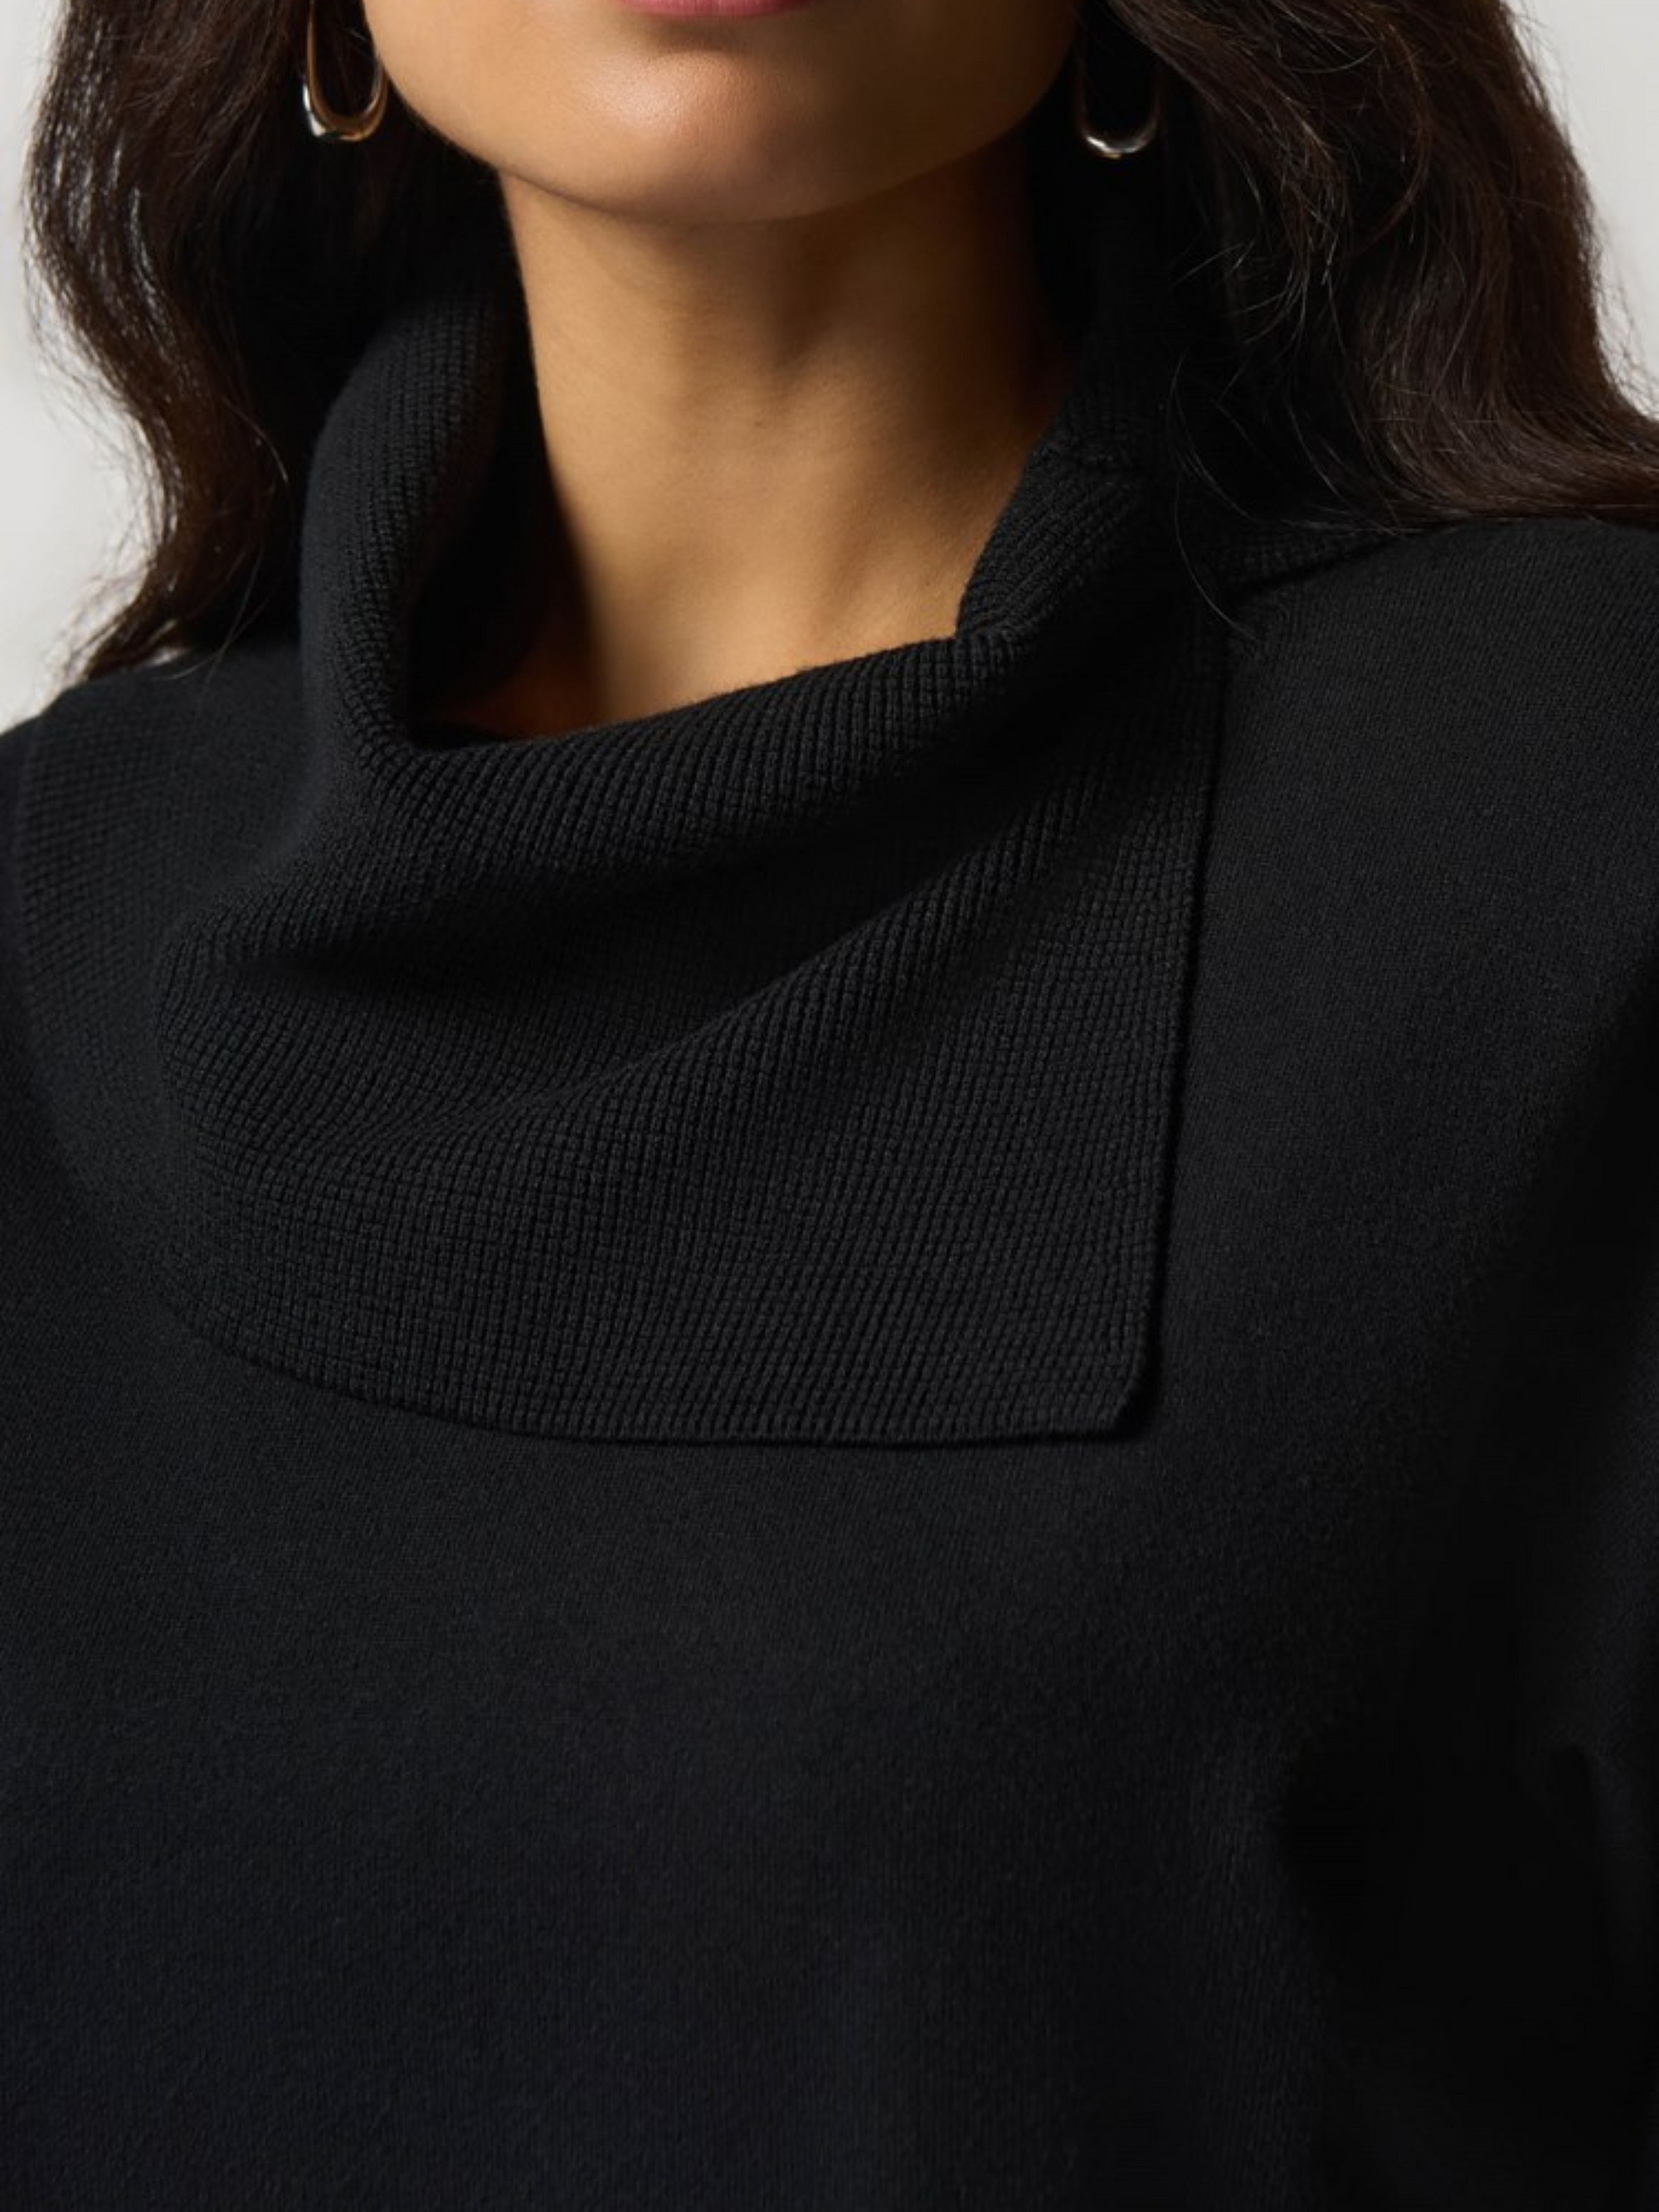 Joseph Ribkoff - Asymmetrical Neckline Sweater